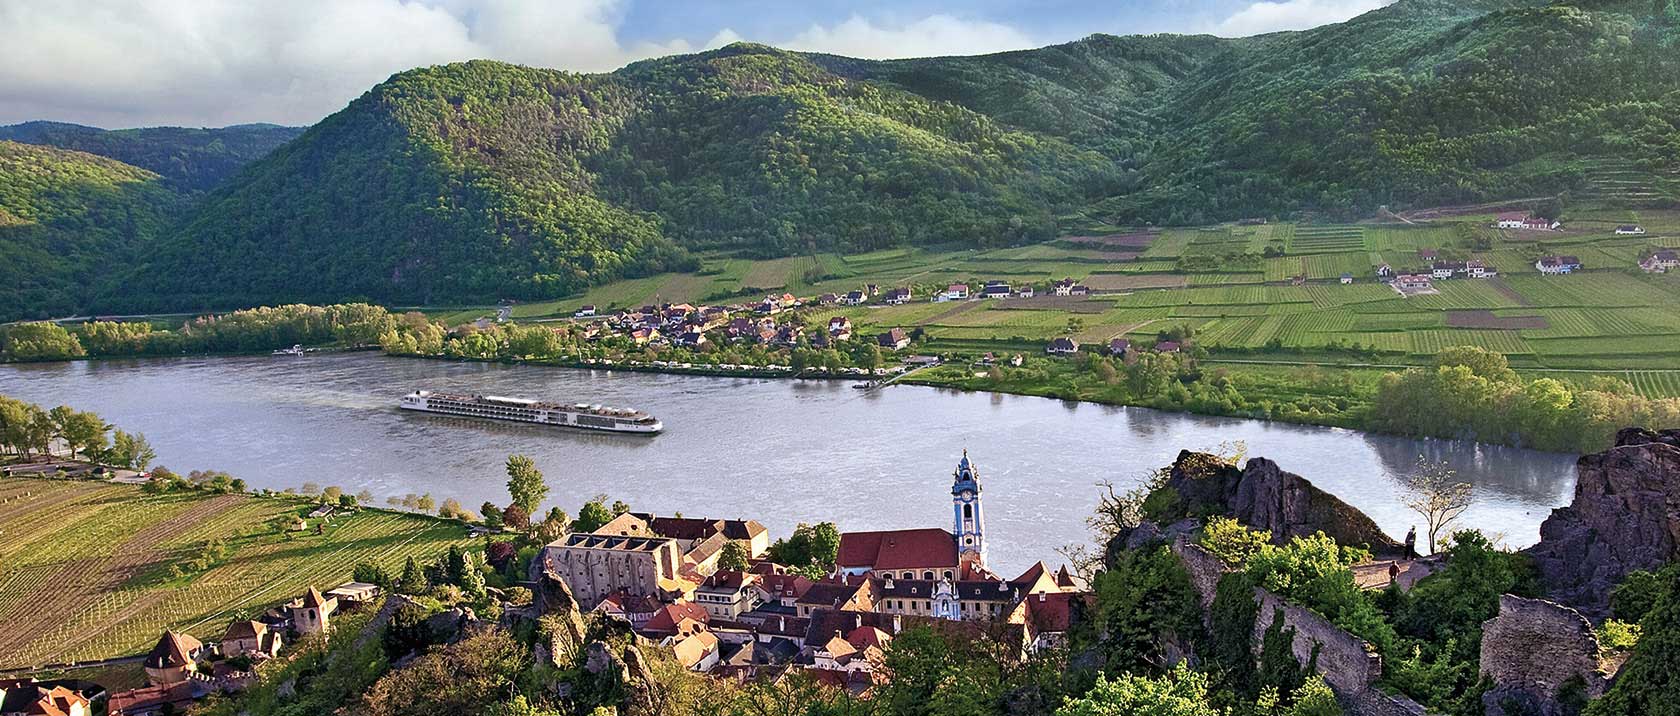 Aerial view of a Viking river ship sailing past Dürnstein, Austria along the Danube river